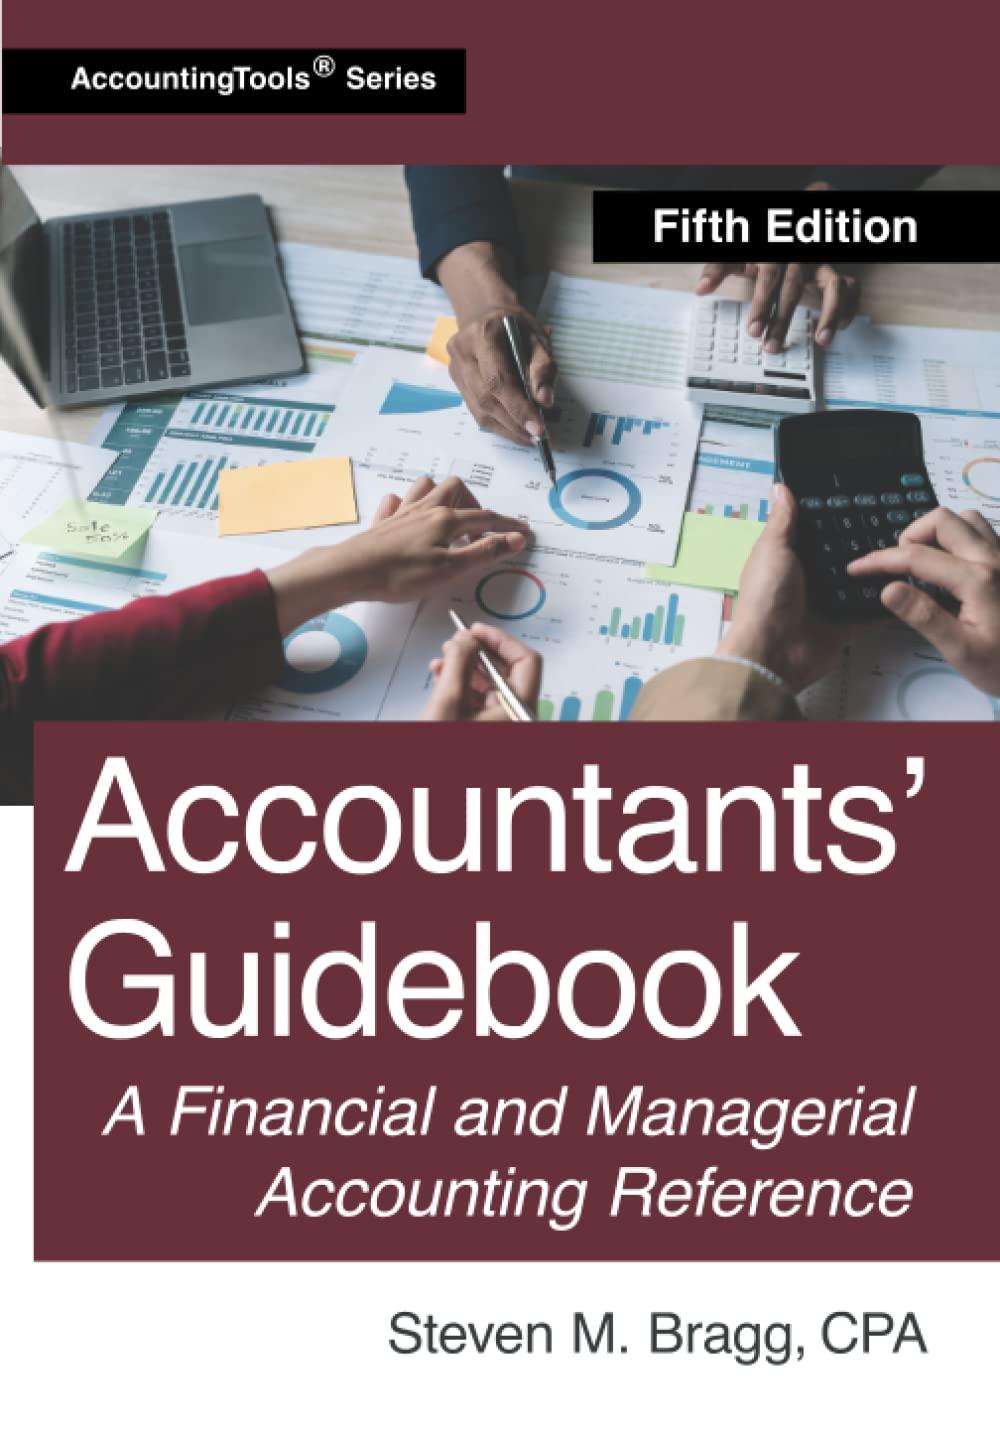 accountants guidebook 5th edition steven m. bragg 1642211028, 978-1642211023